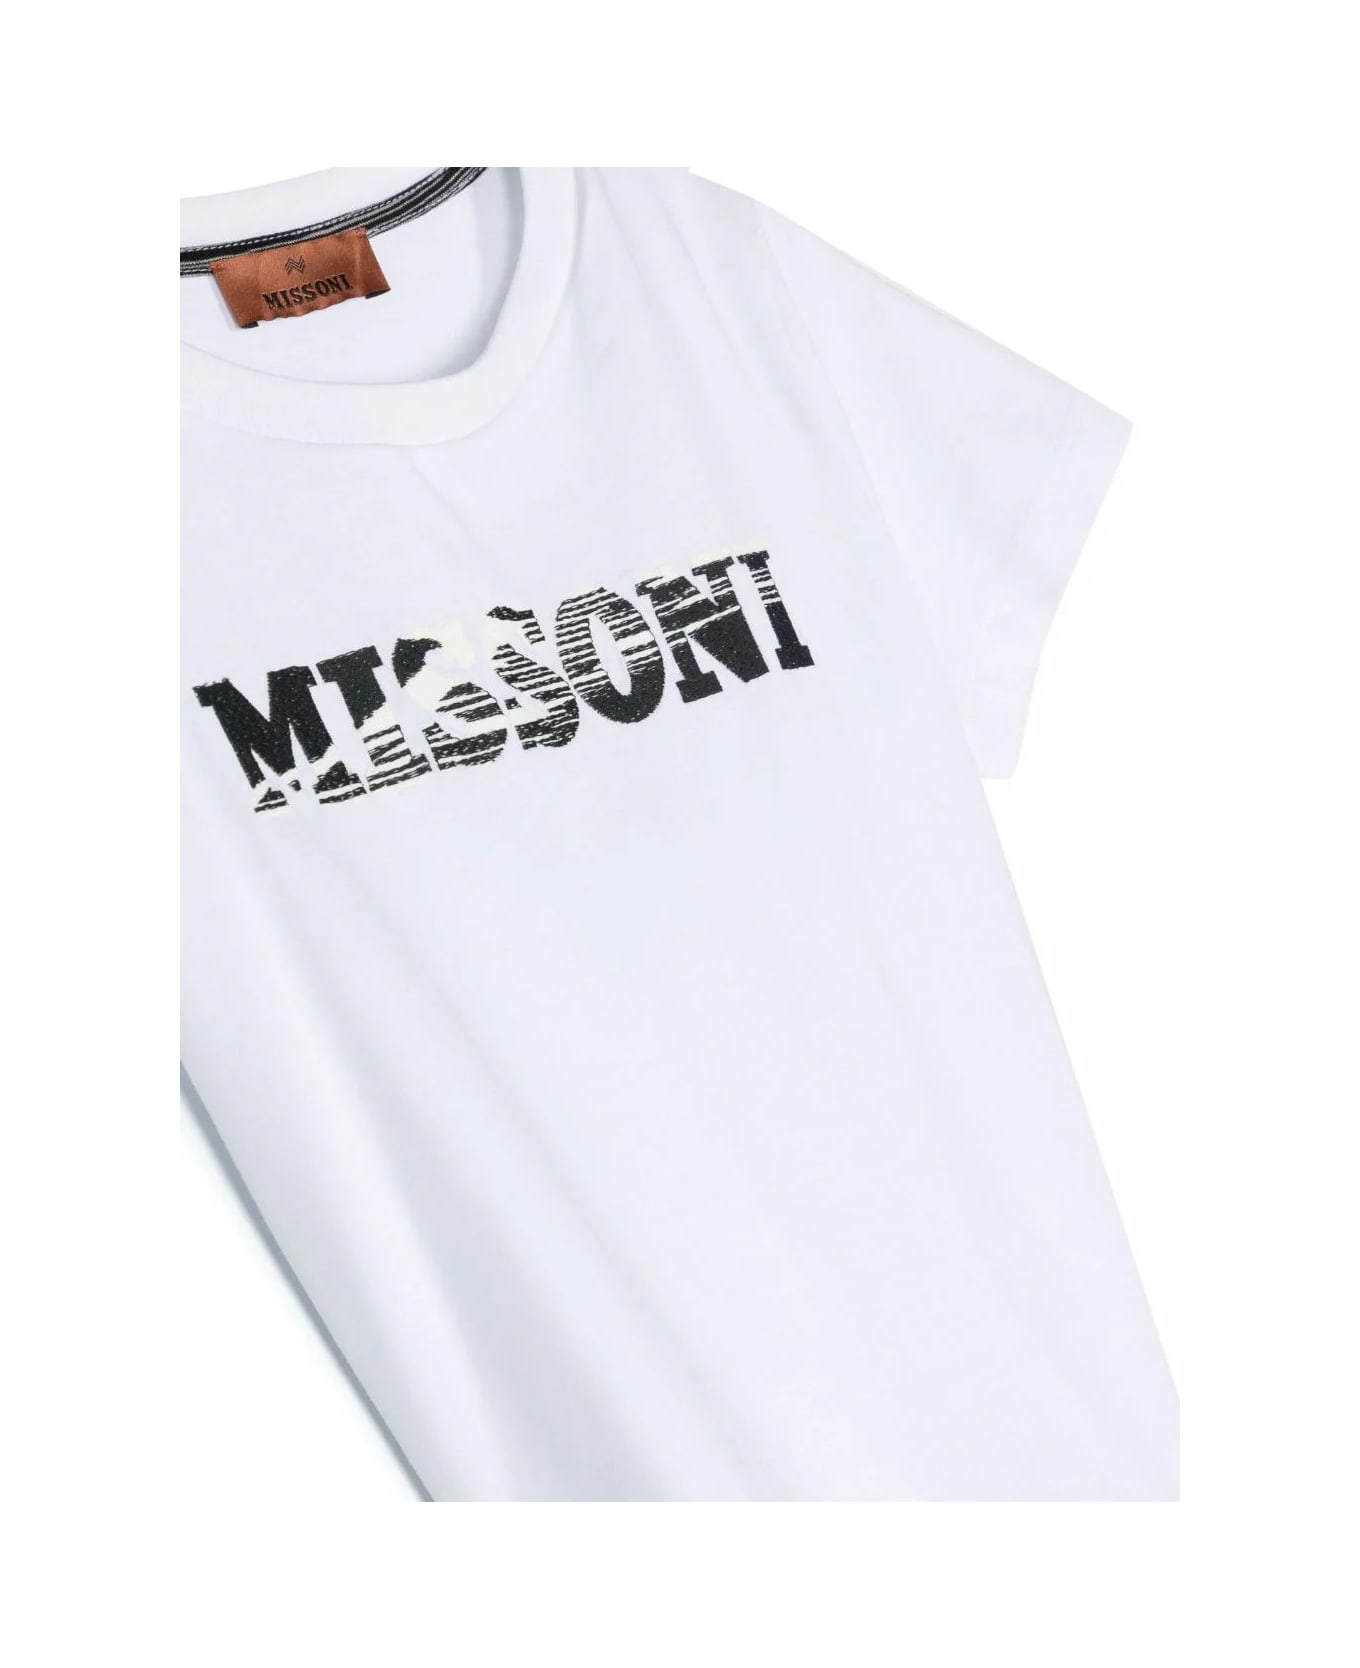 Missoni Kids White T-shirt With Black Logo - C